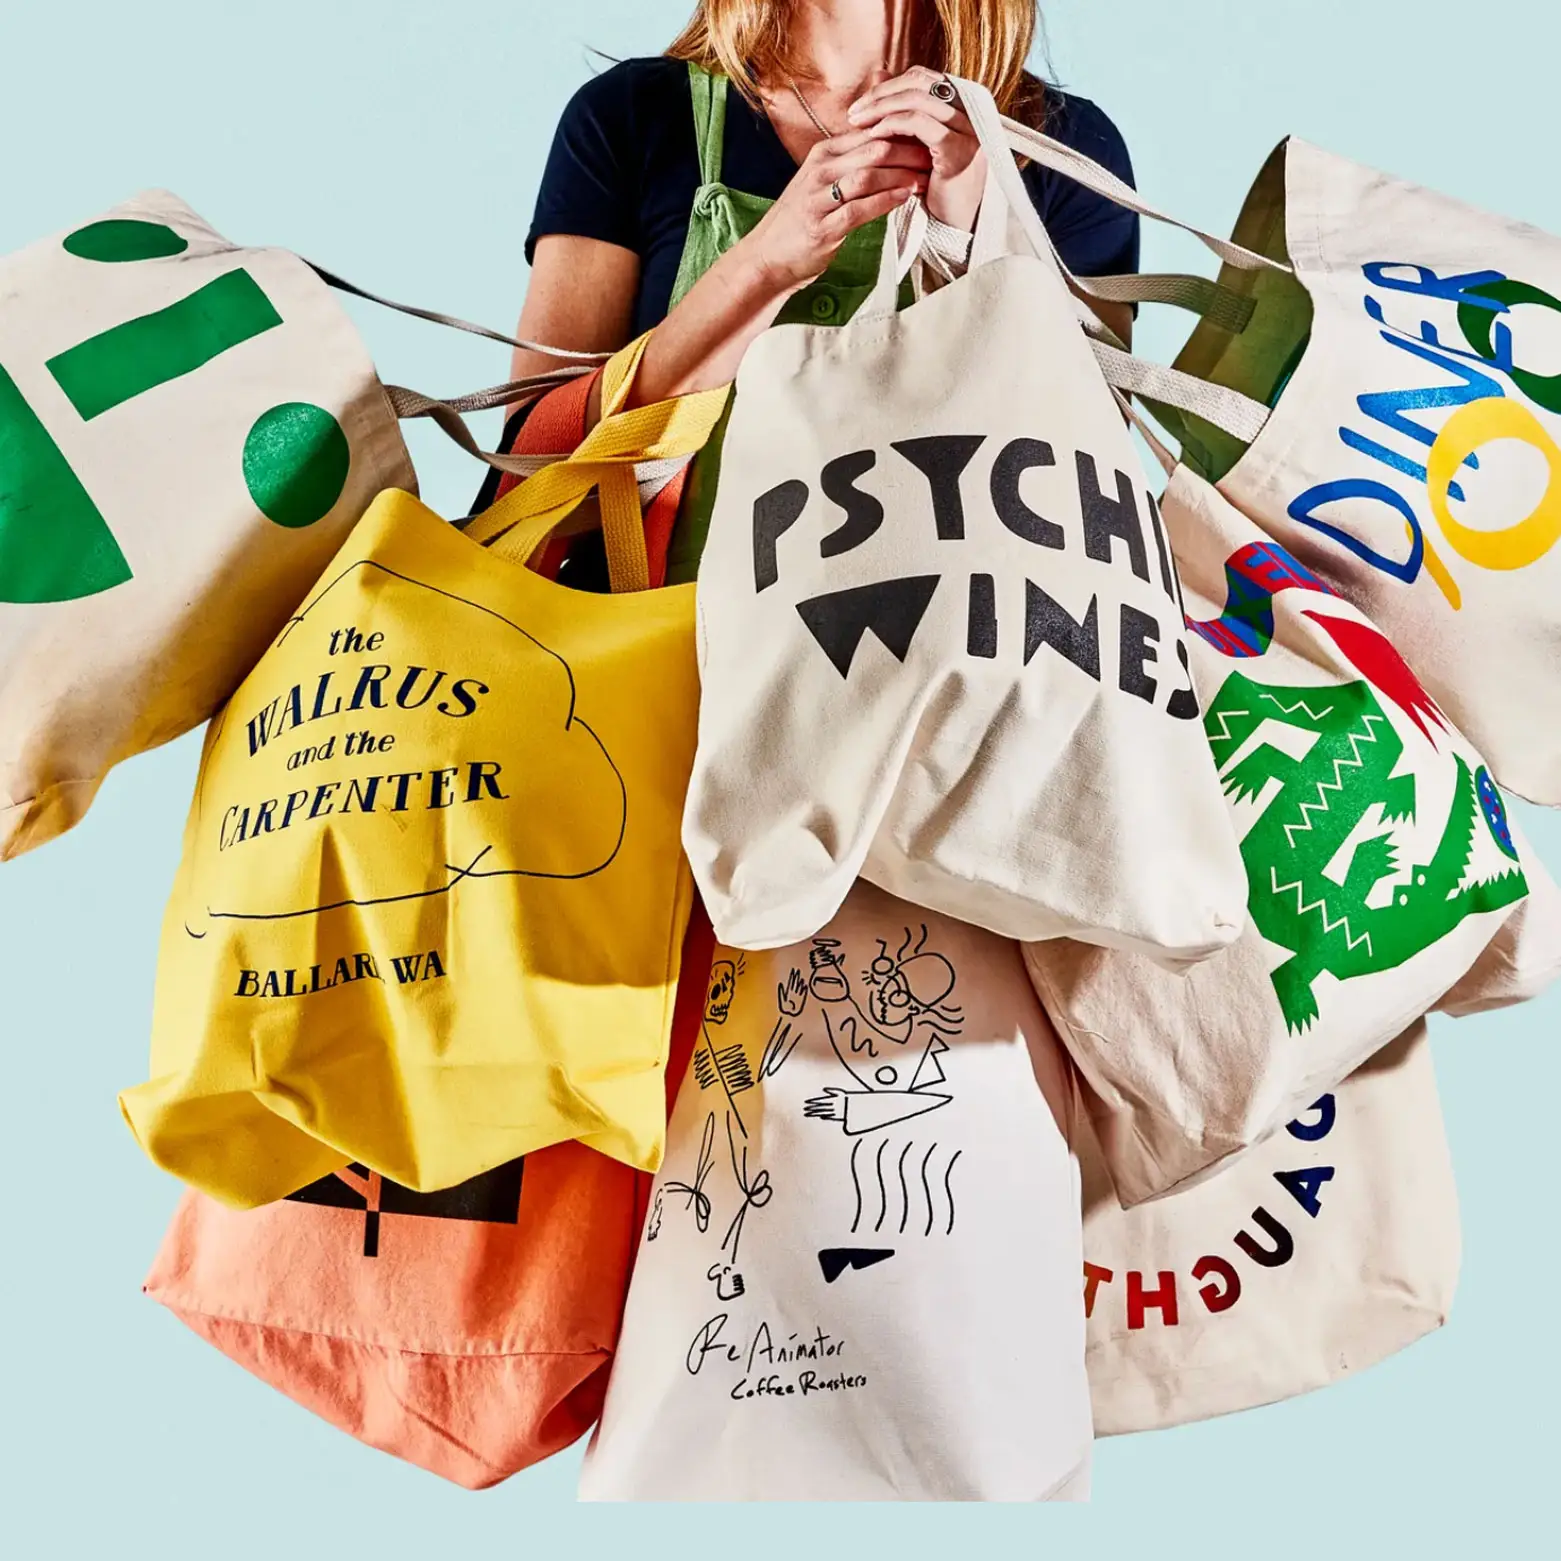 wholesale custom logo promotional plain black latest organic cotton canvas tote bag shopping bag,cotton bag,canvas bag